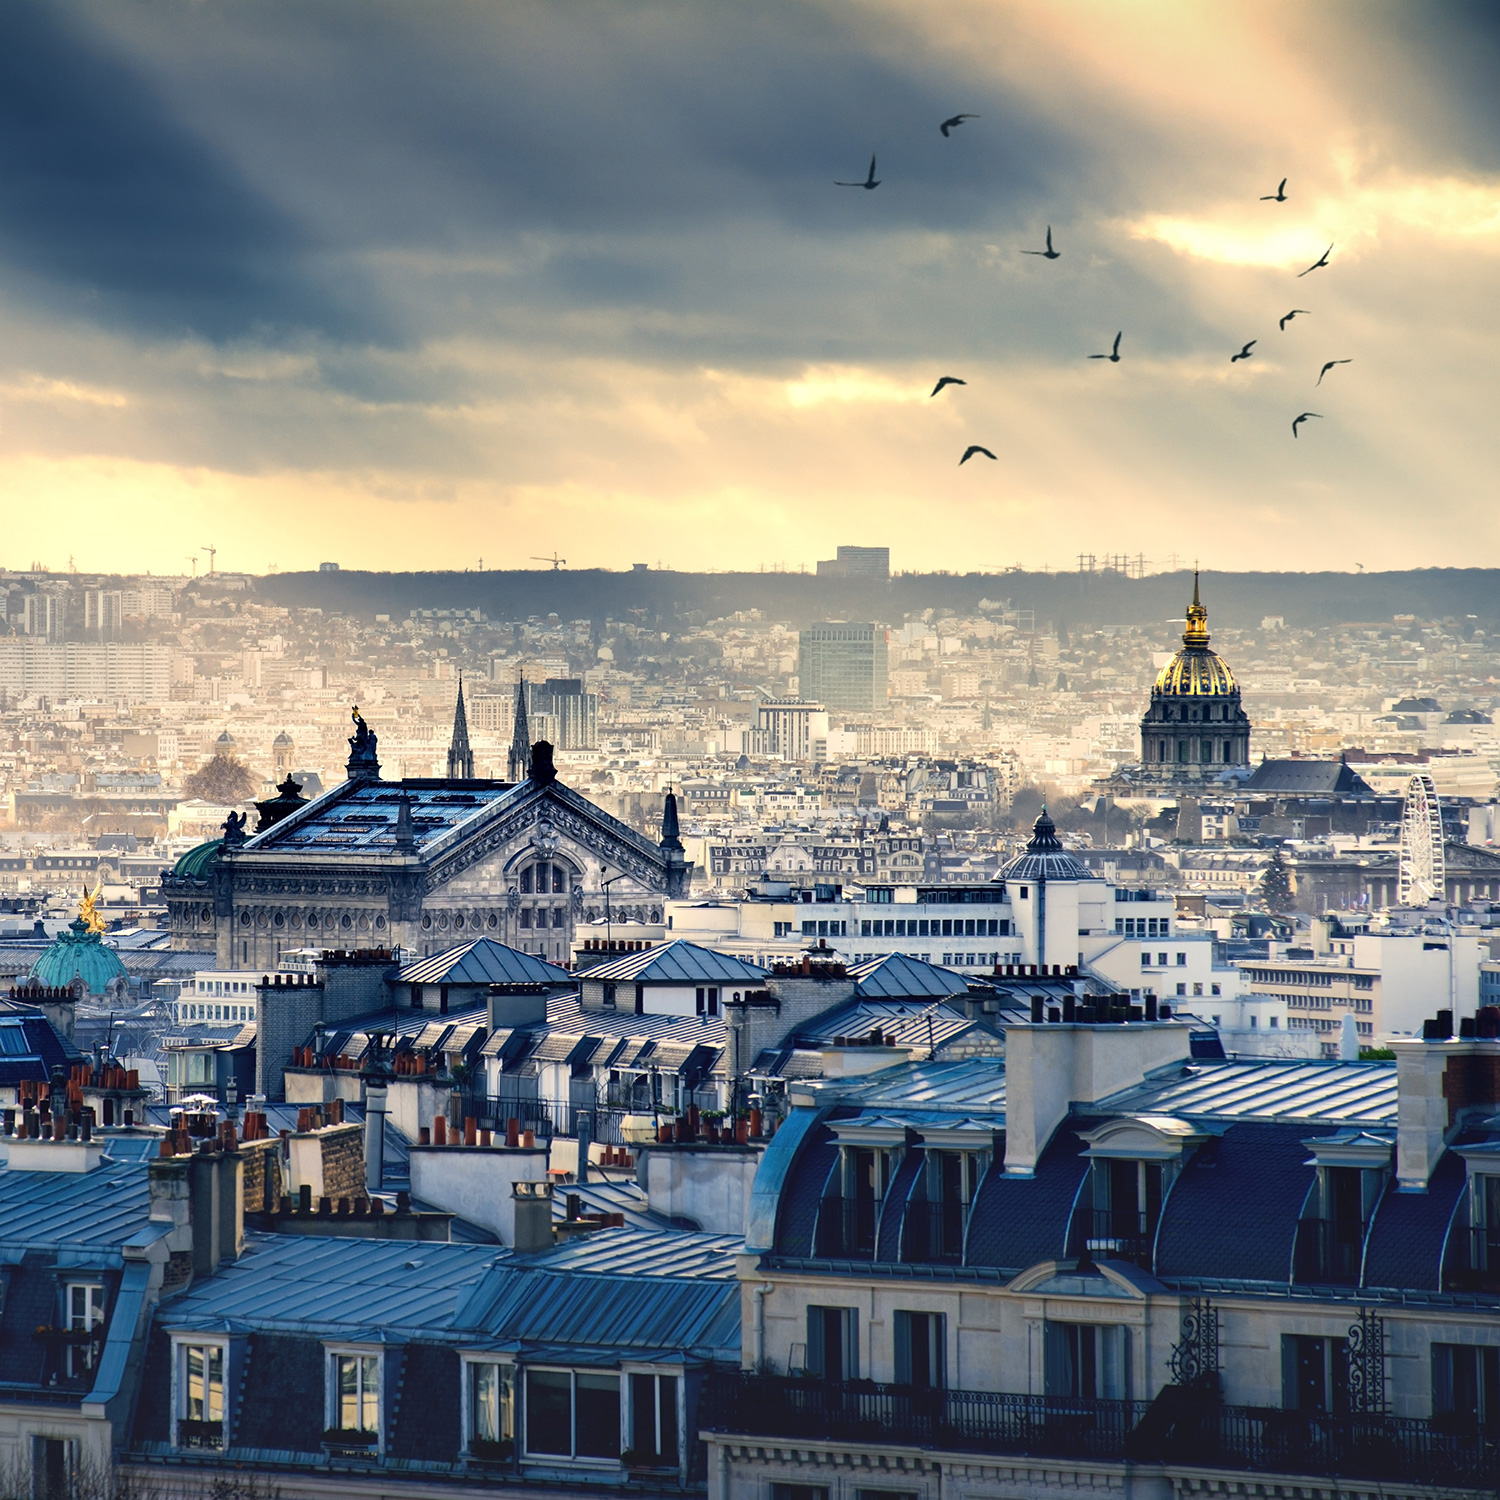 Paris, France by IM_photo